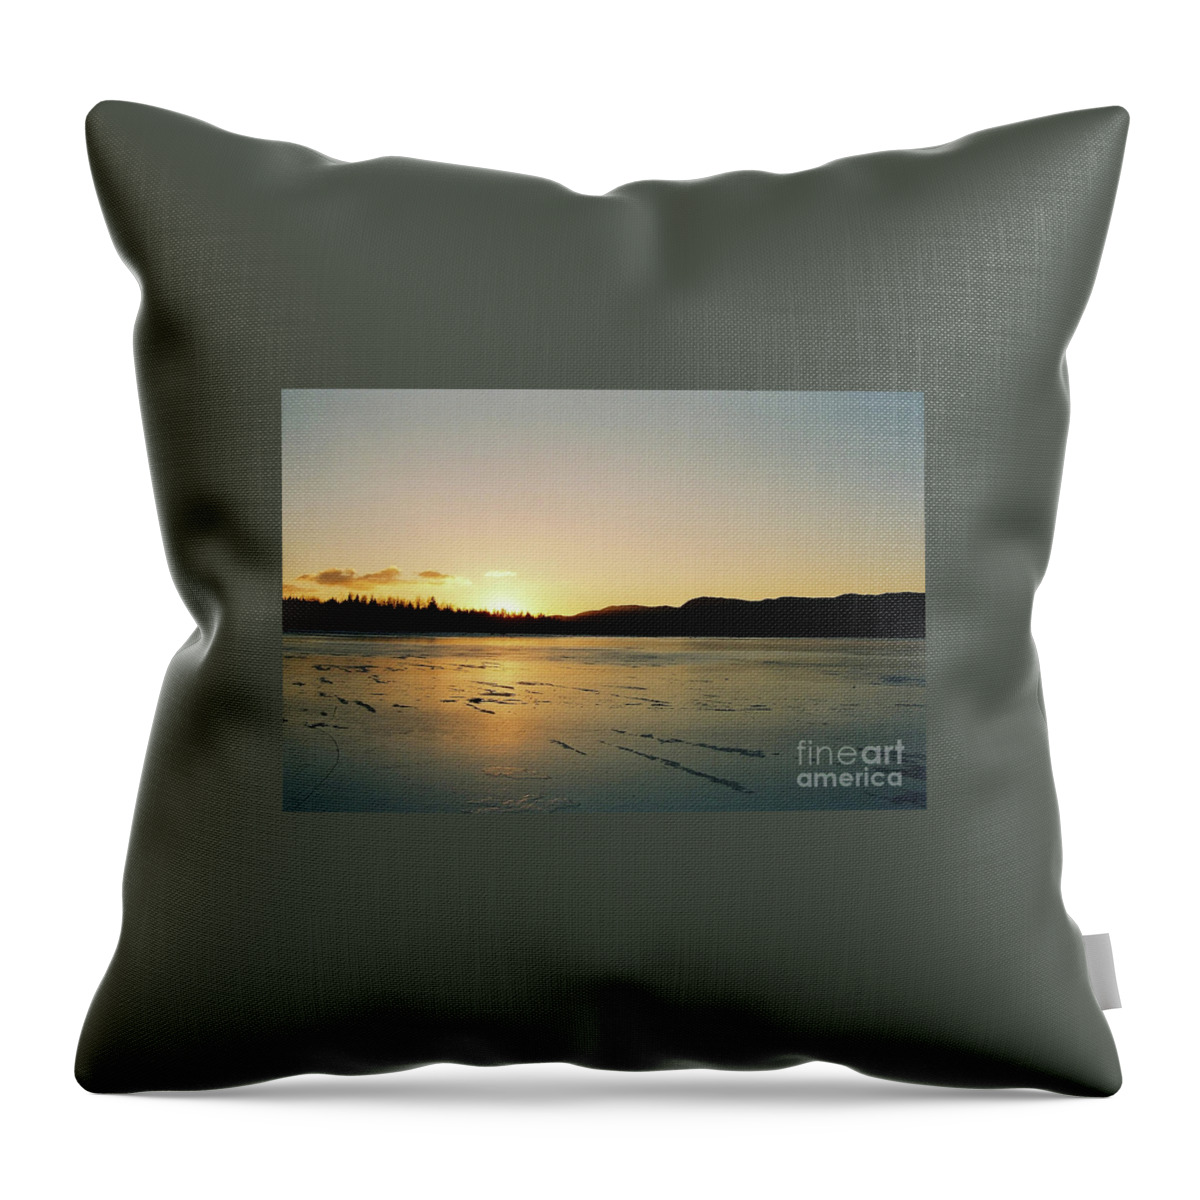 #juneau #alaska #ak #mendenhall #mendenhalllake #lake #winter #frozen #sunset #cold #vacation #peaceful Throw Pillow featuring the photograph Frozen Sunset by Charles Vice